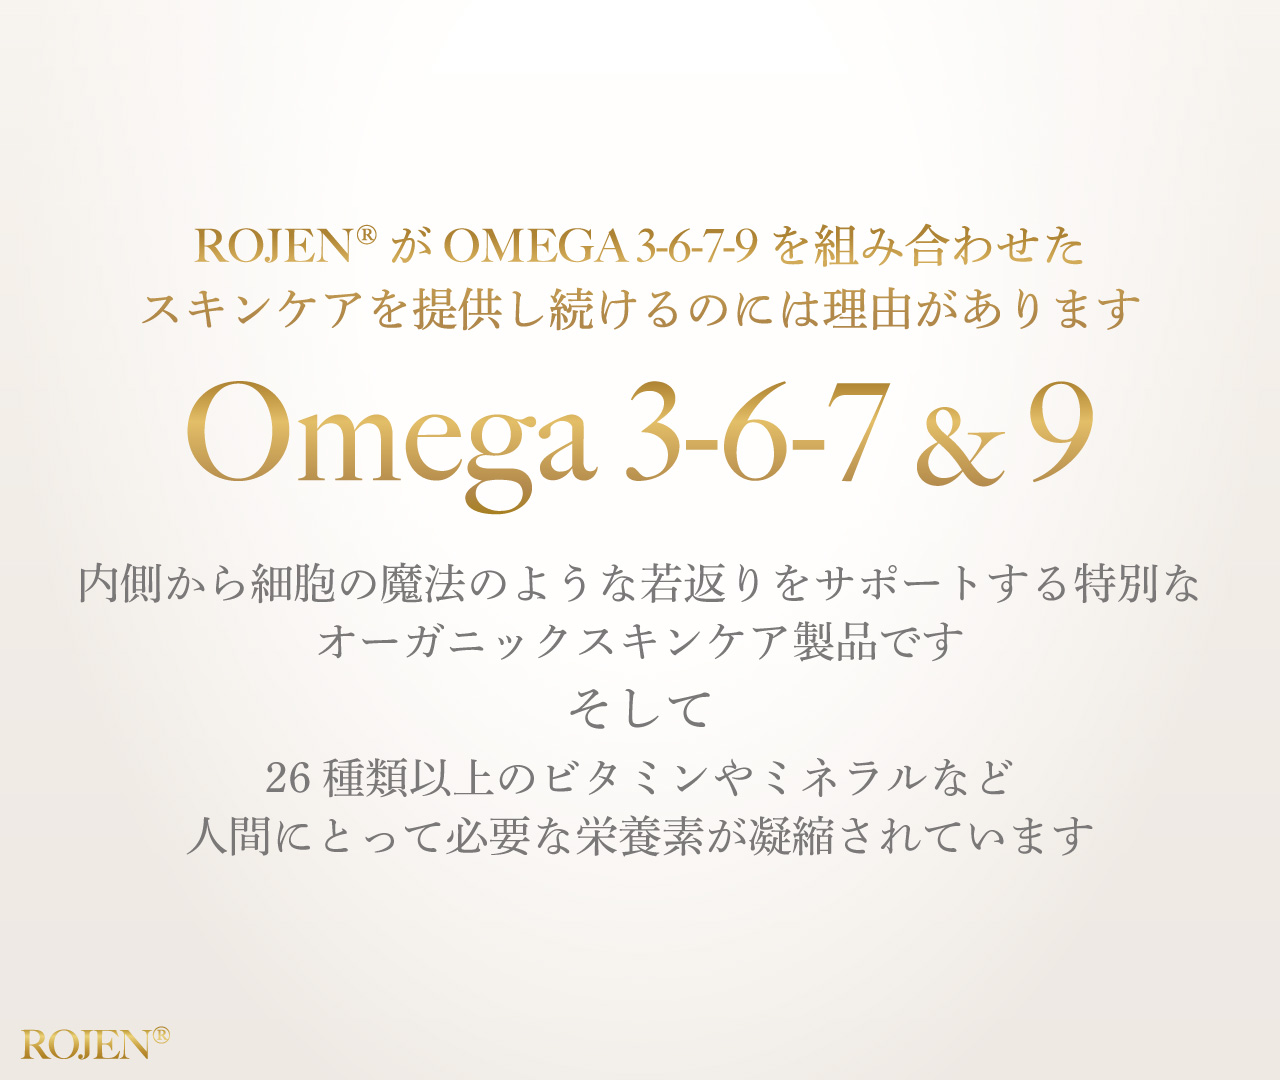 OMEGA_jp_mb-text